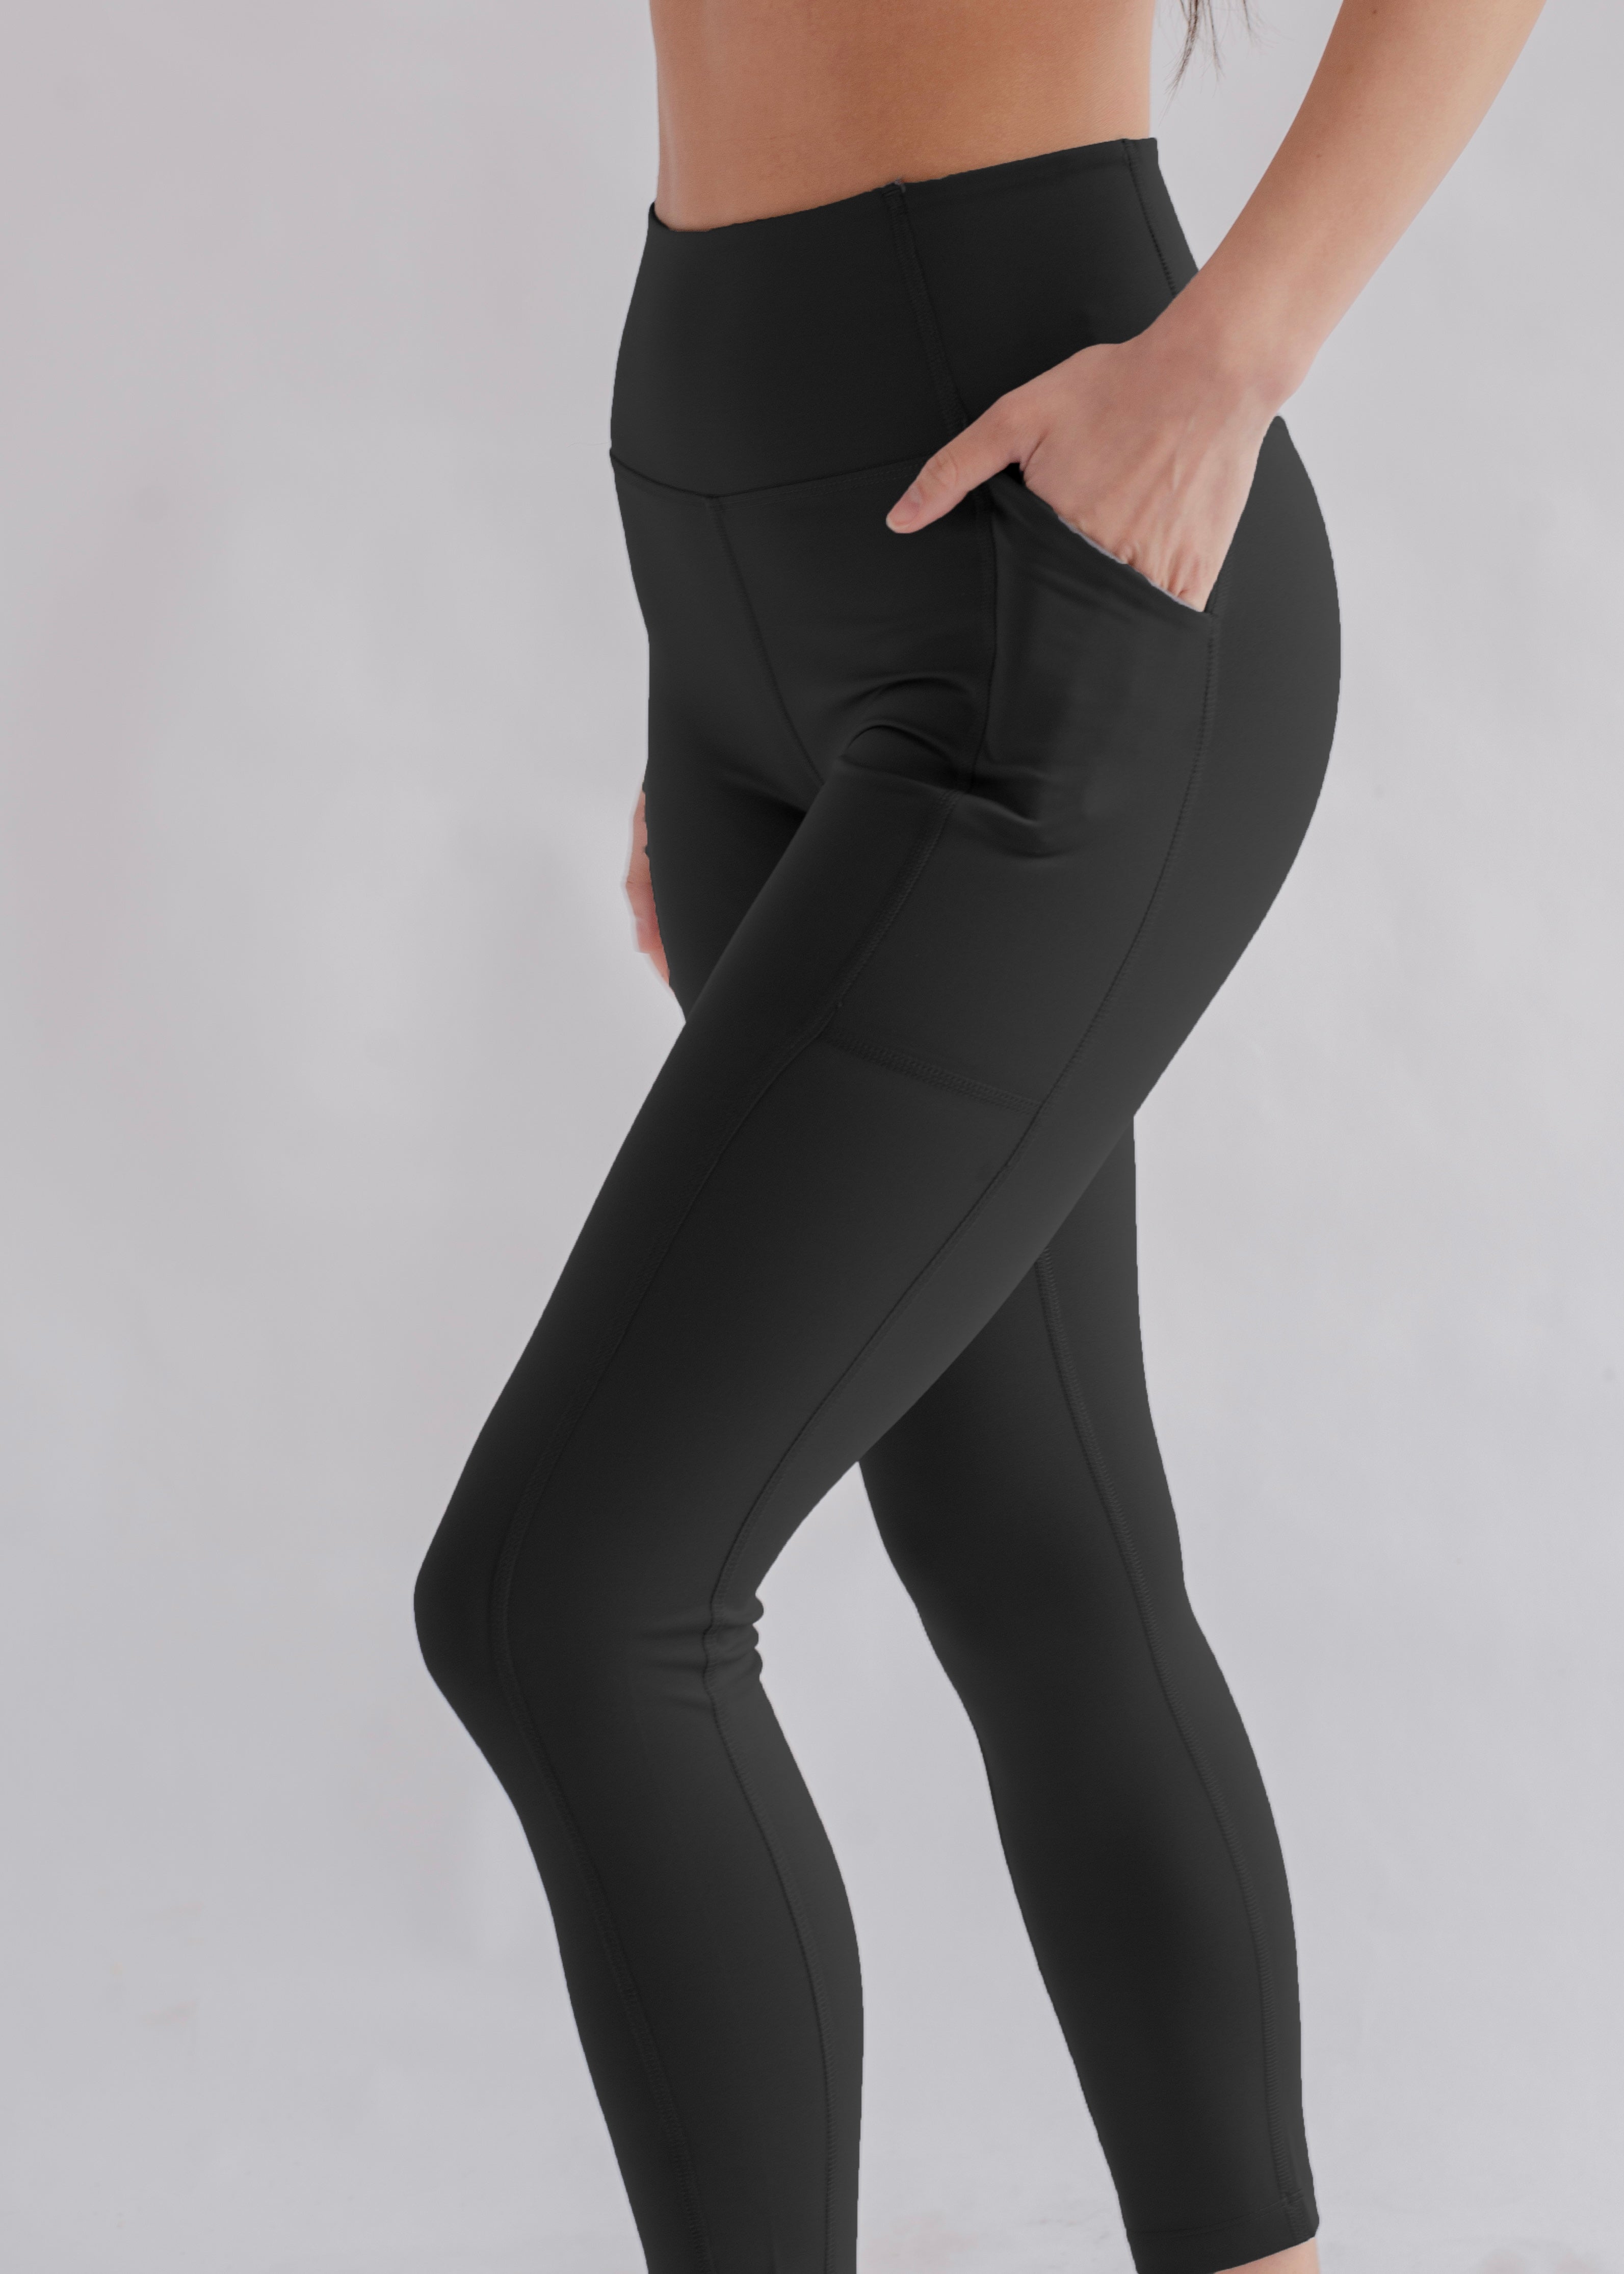 ID IDEOLOGY Women's Compression High-Waist Side-Pocket Leggings Black Size  S